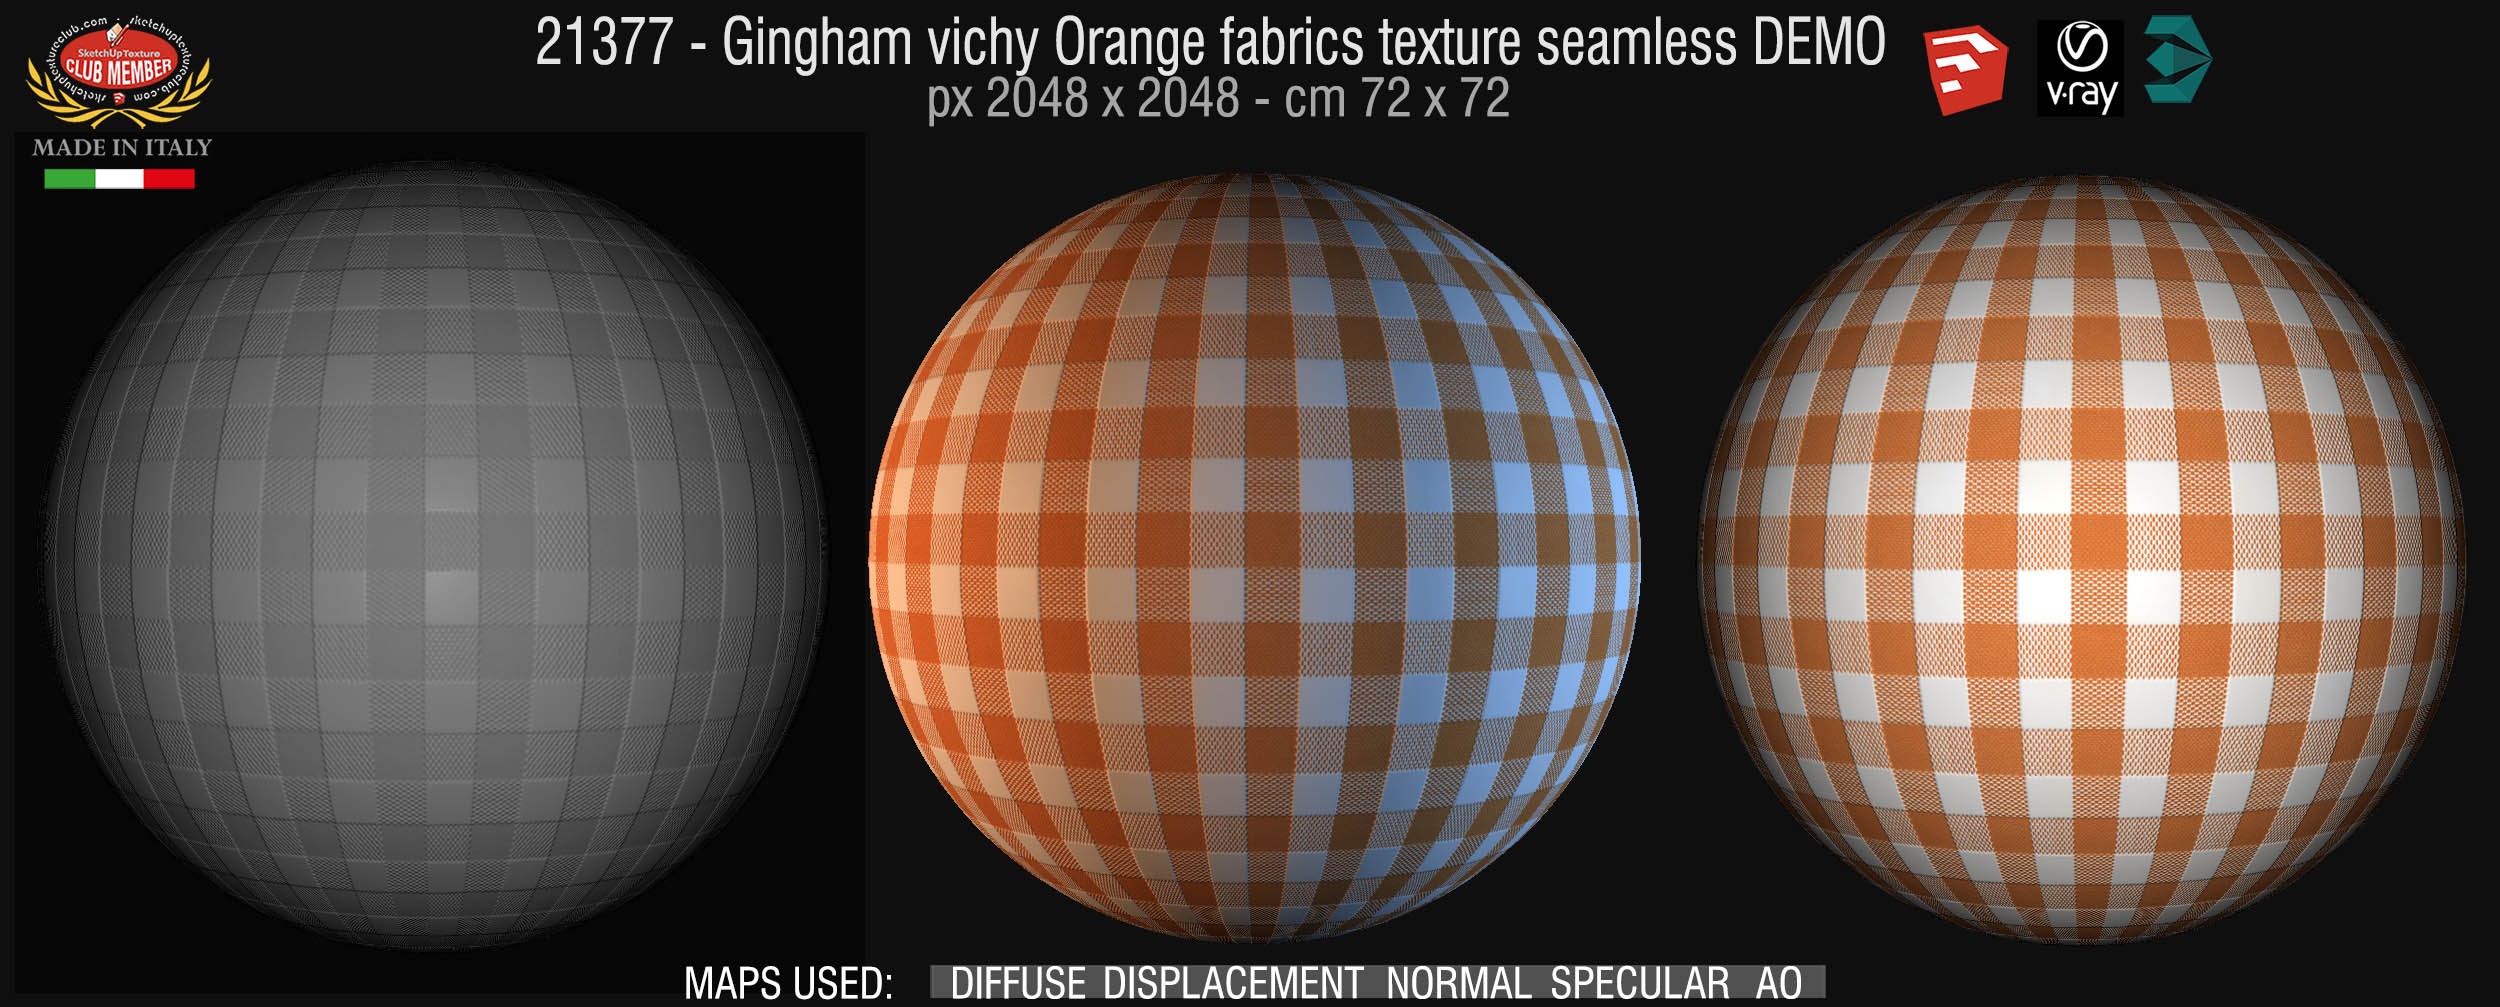 21377  Gingham vichy orange fabrics texture + maps DEMO